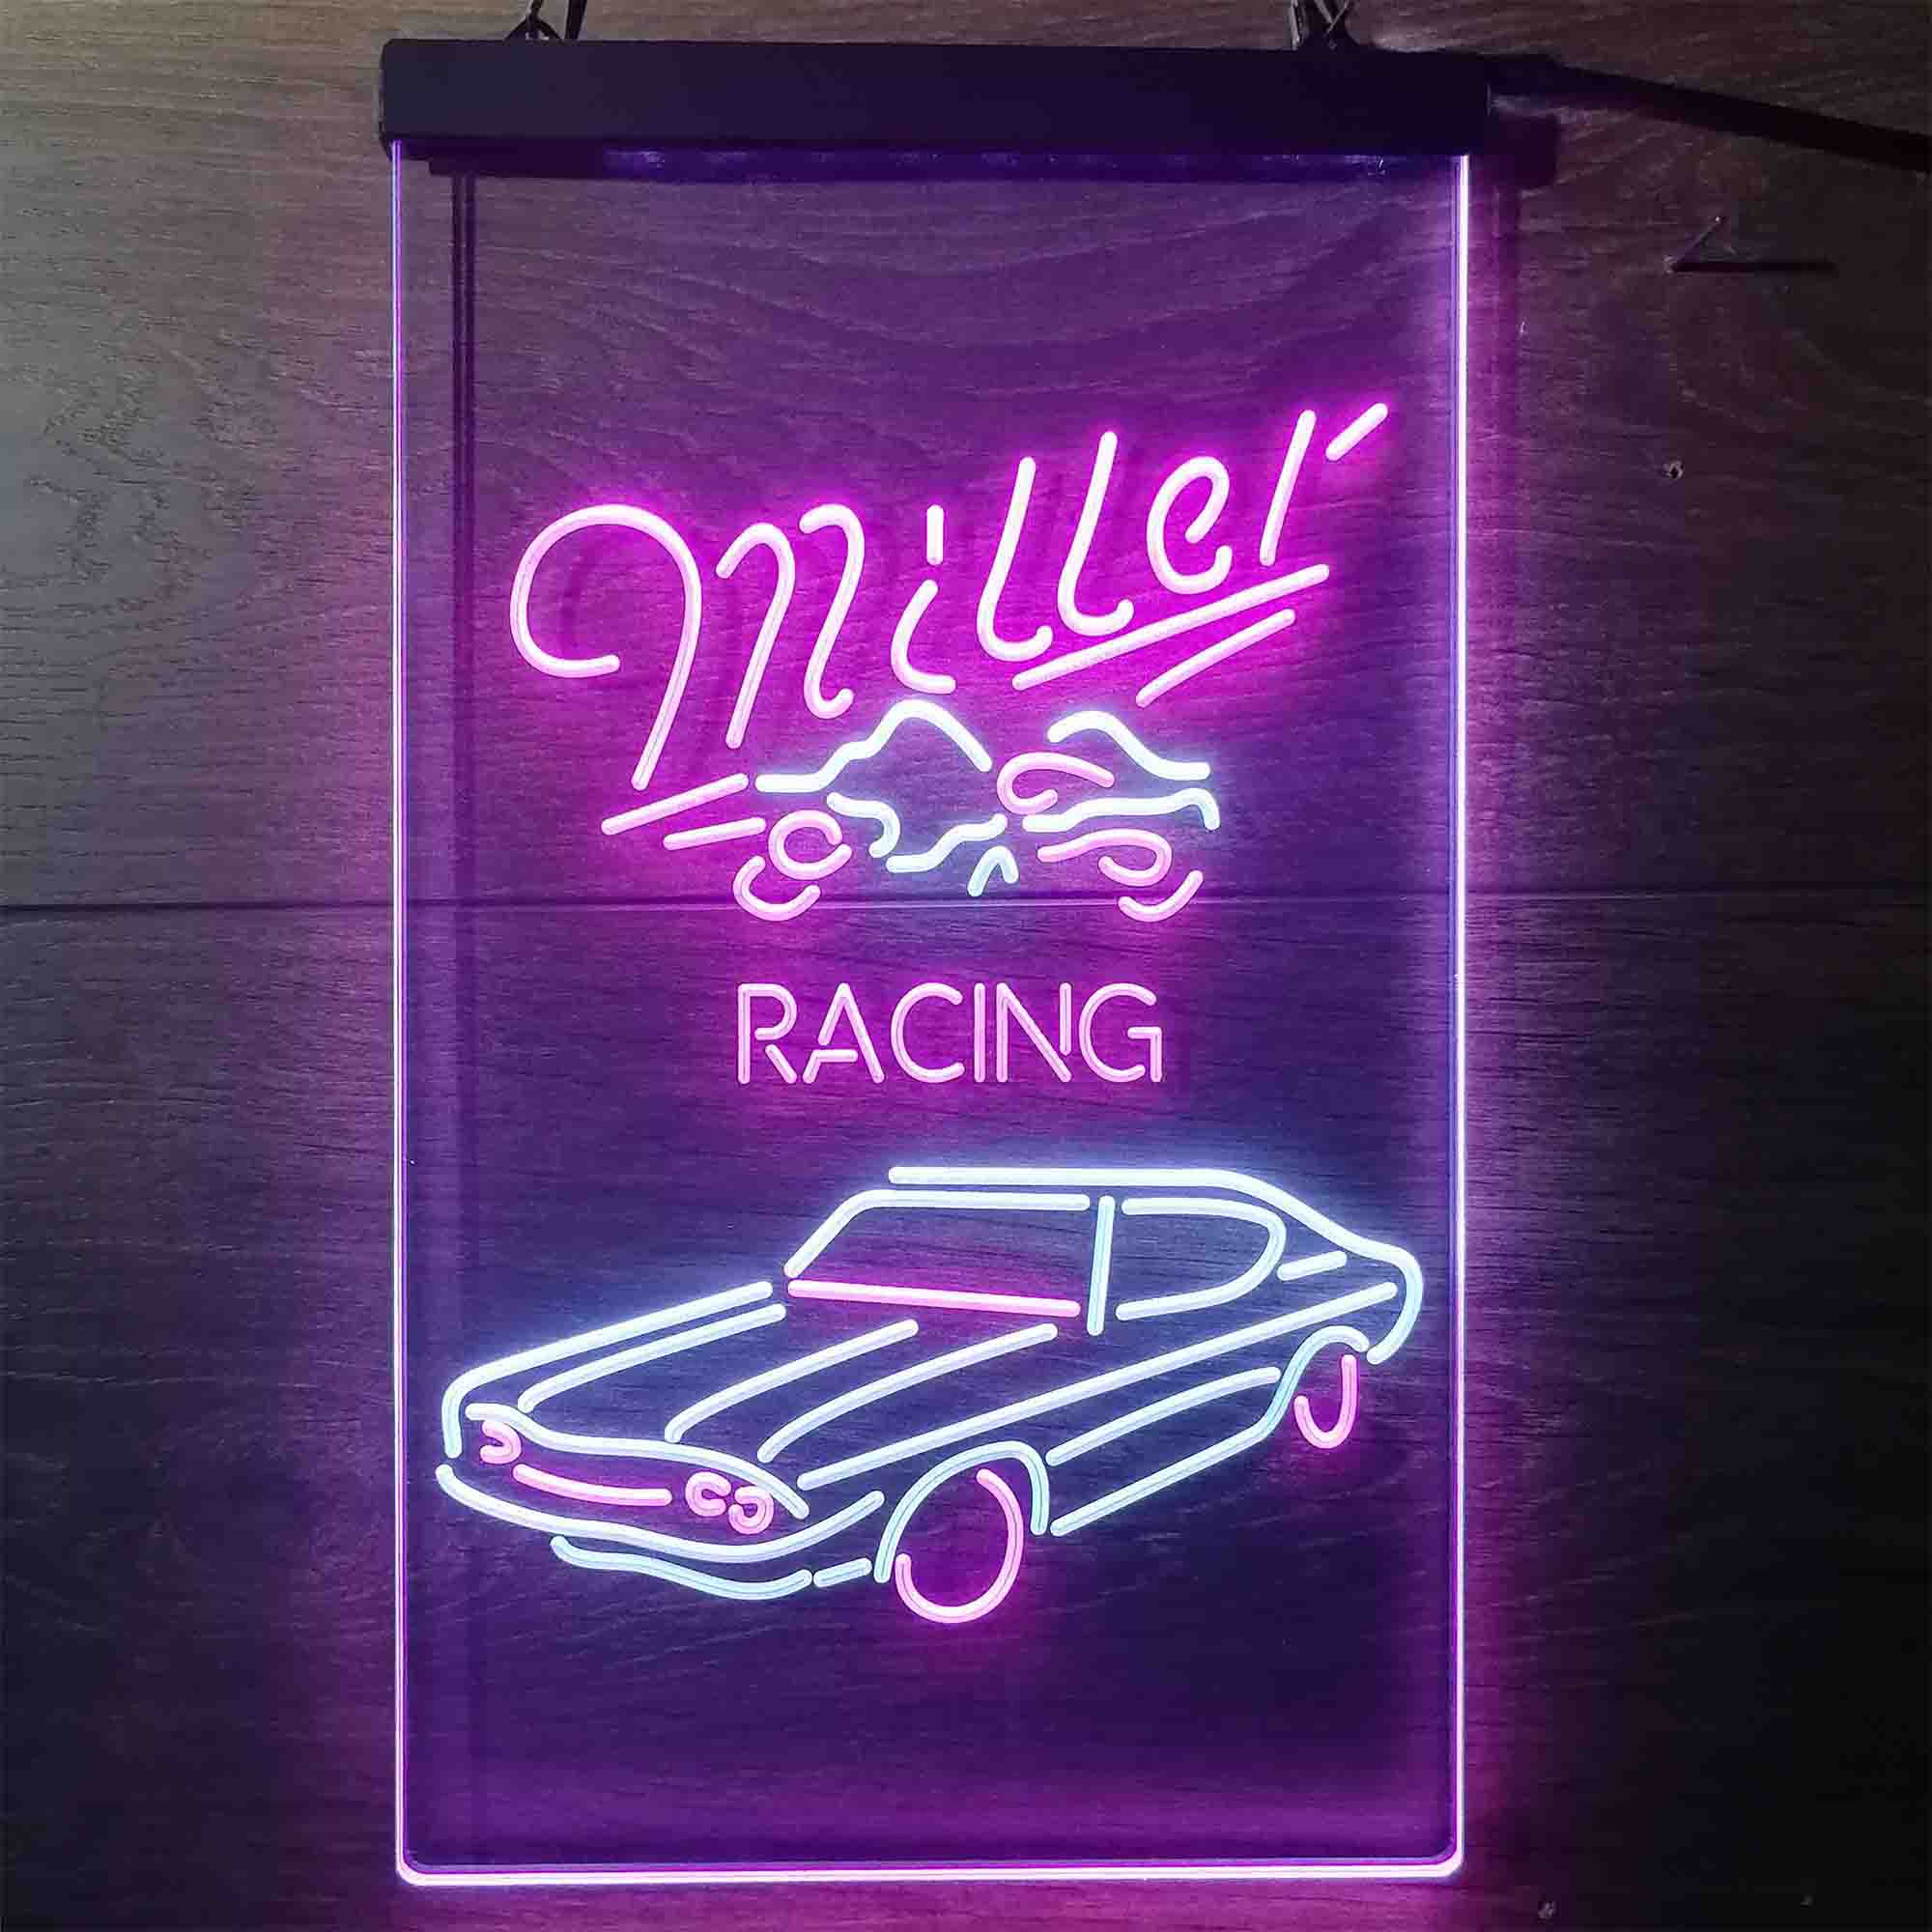 Miller Lite Car Racing Sport Beer Neon LED Sign